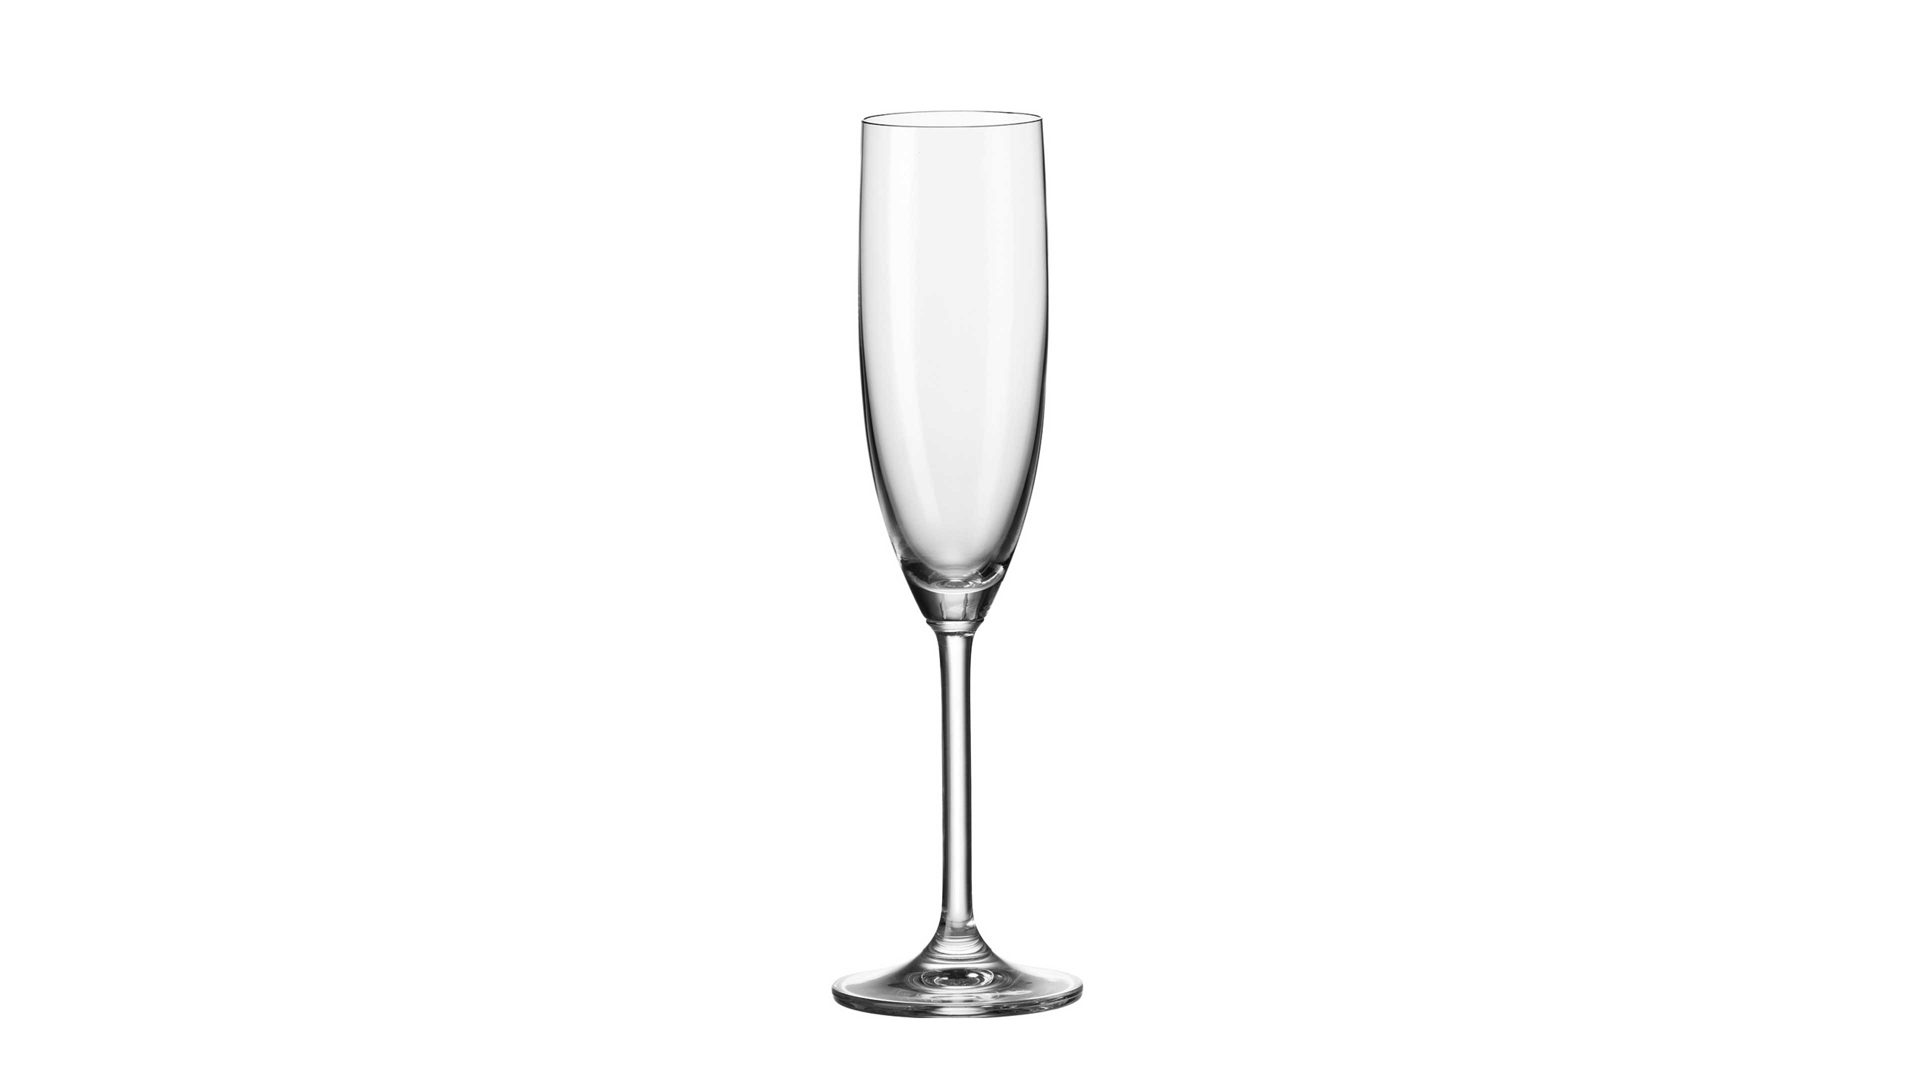 Sektglas Leonardo | glaskoch aus Glas in Transparent LEONARDO Sektglas Daily TEQTON®-Kristallglas – Fassungvermögen ca. 200 ml